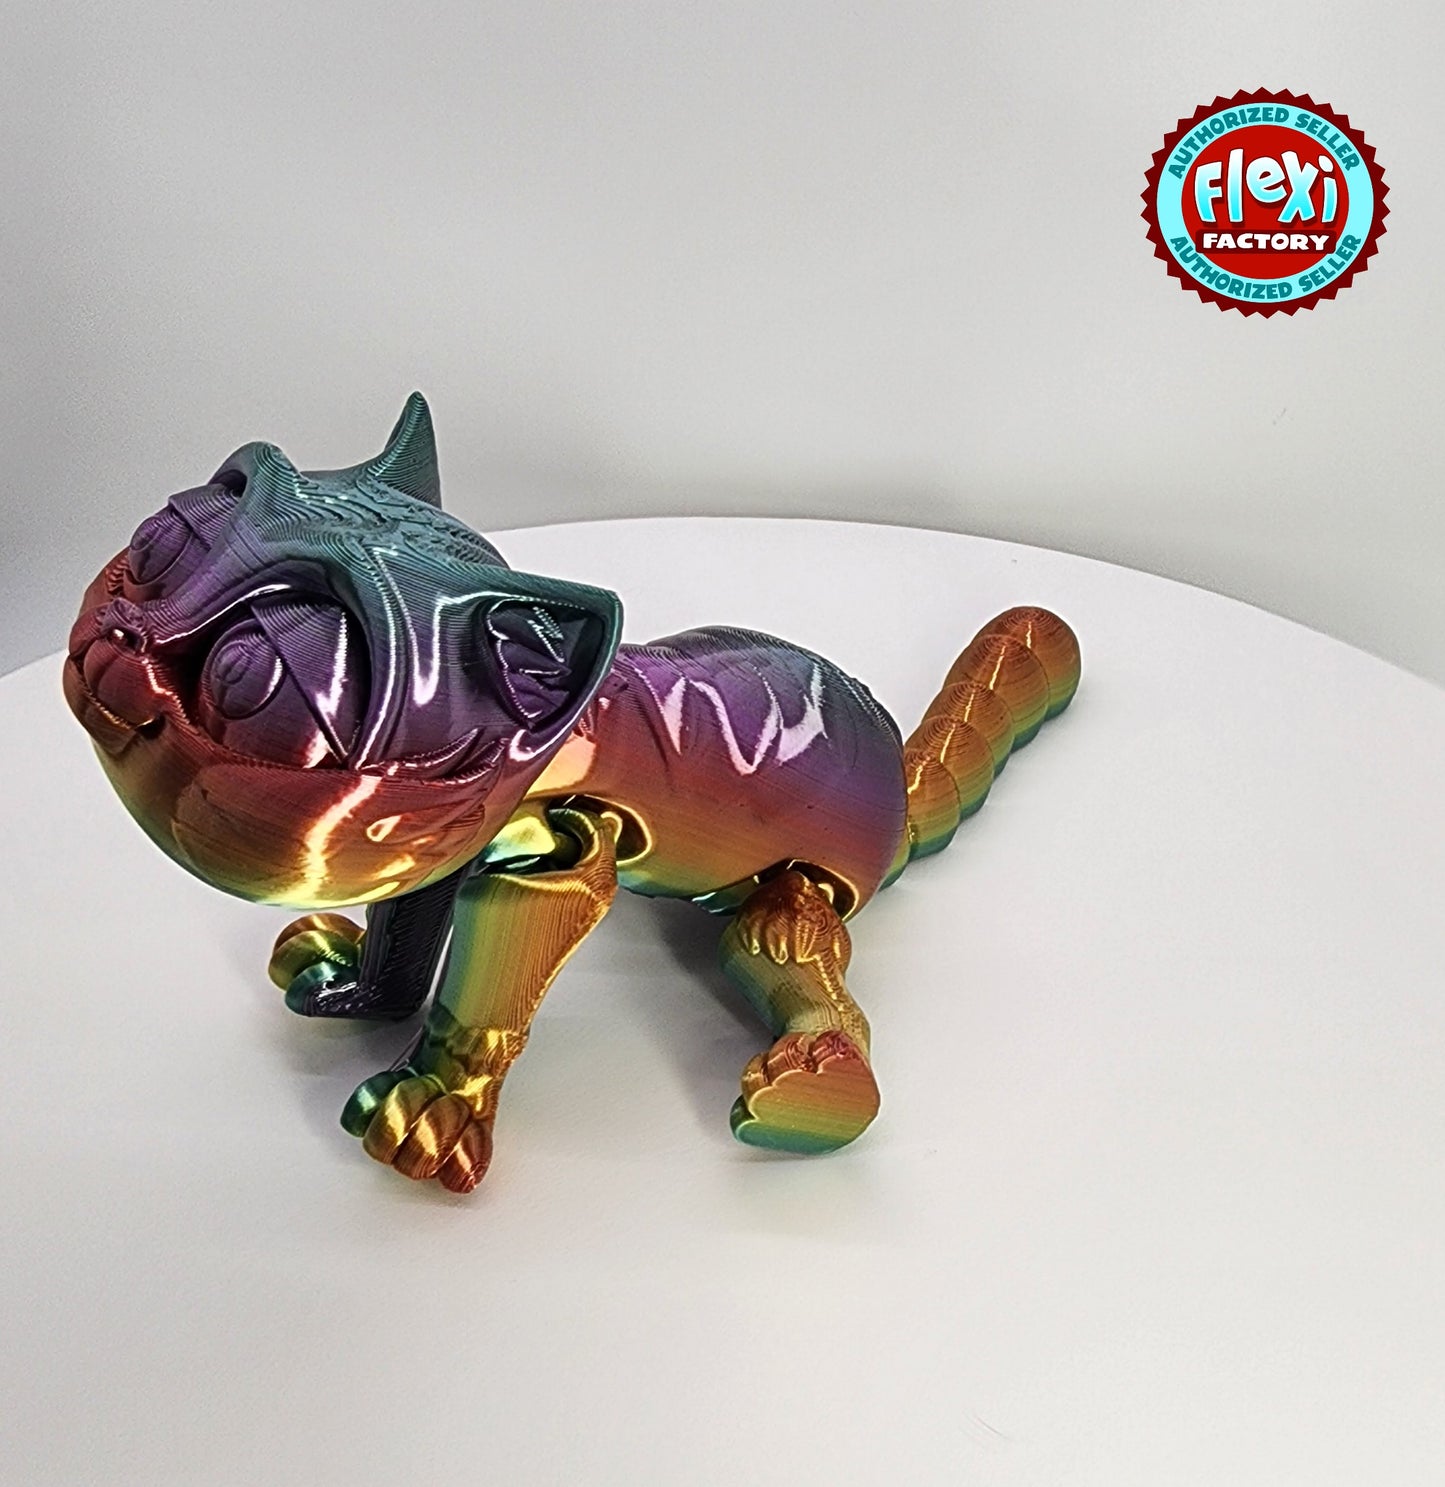 The Articulating Rainbow Kitten Sculpture / Fidget Toy